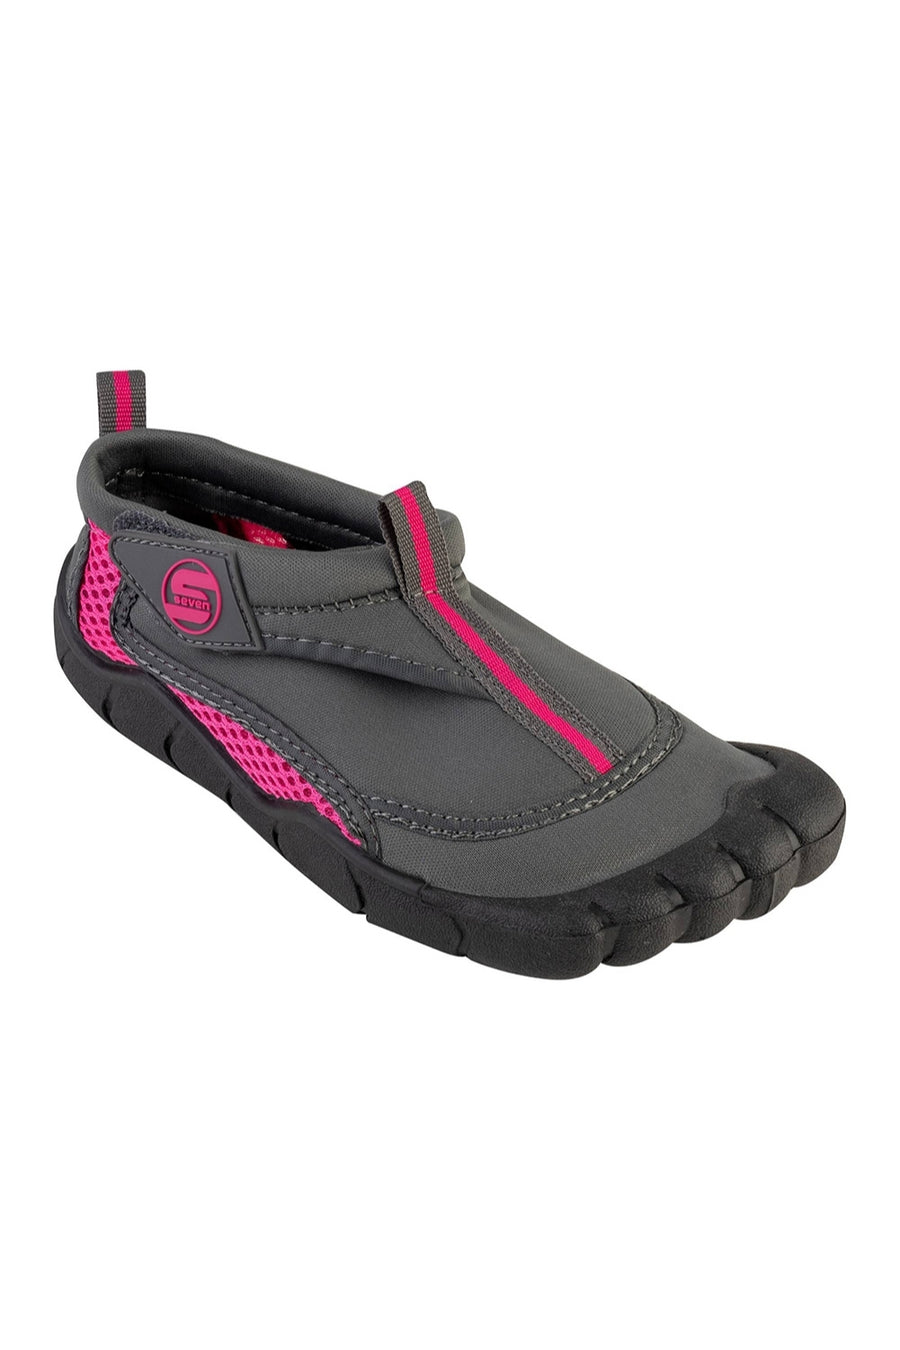 Kids Aqua Sock Wave Water Shoes, Gray - Vacay Land 